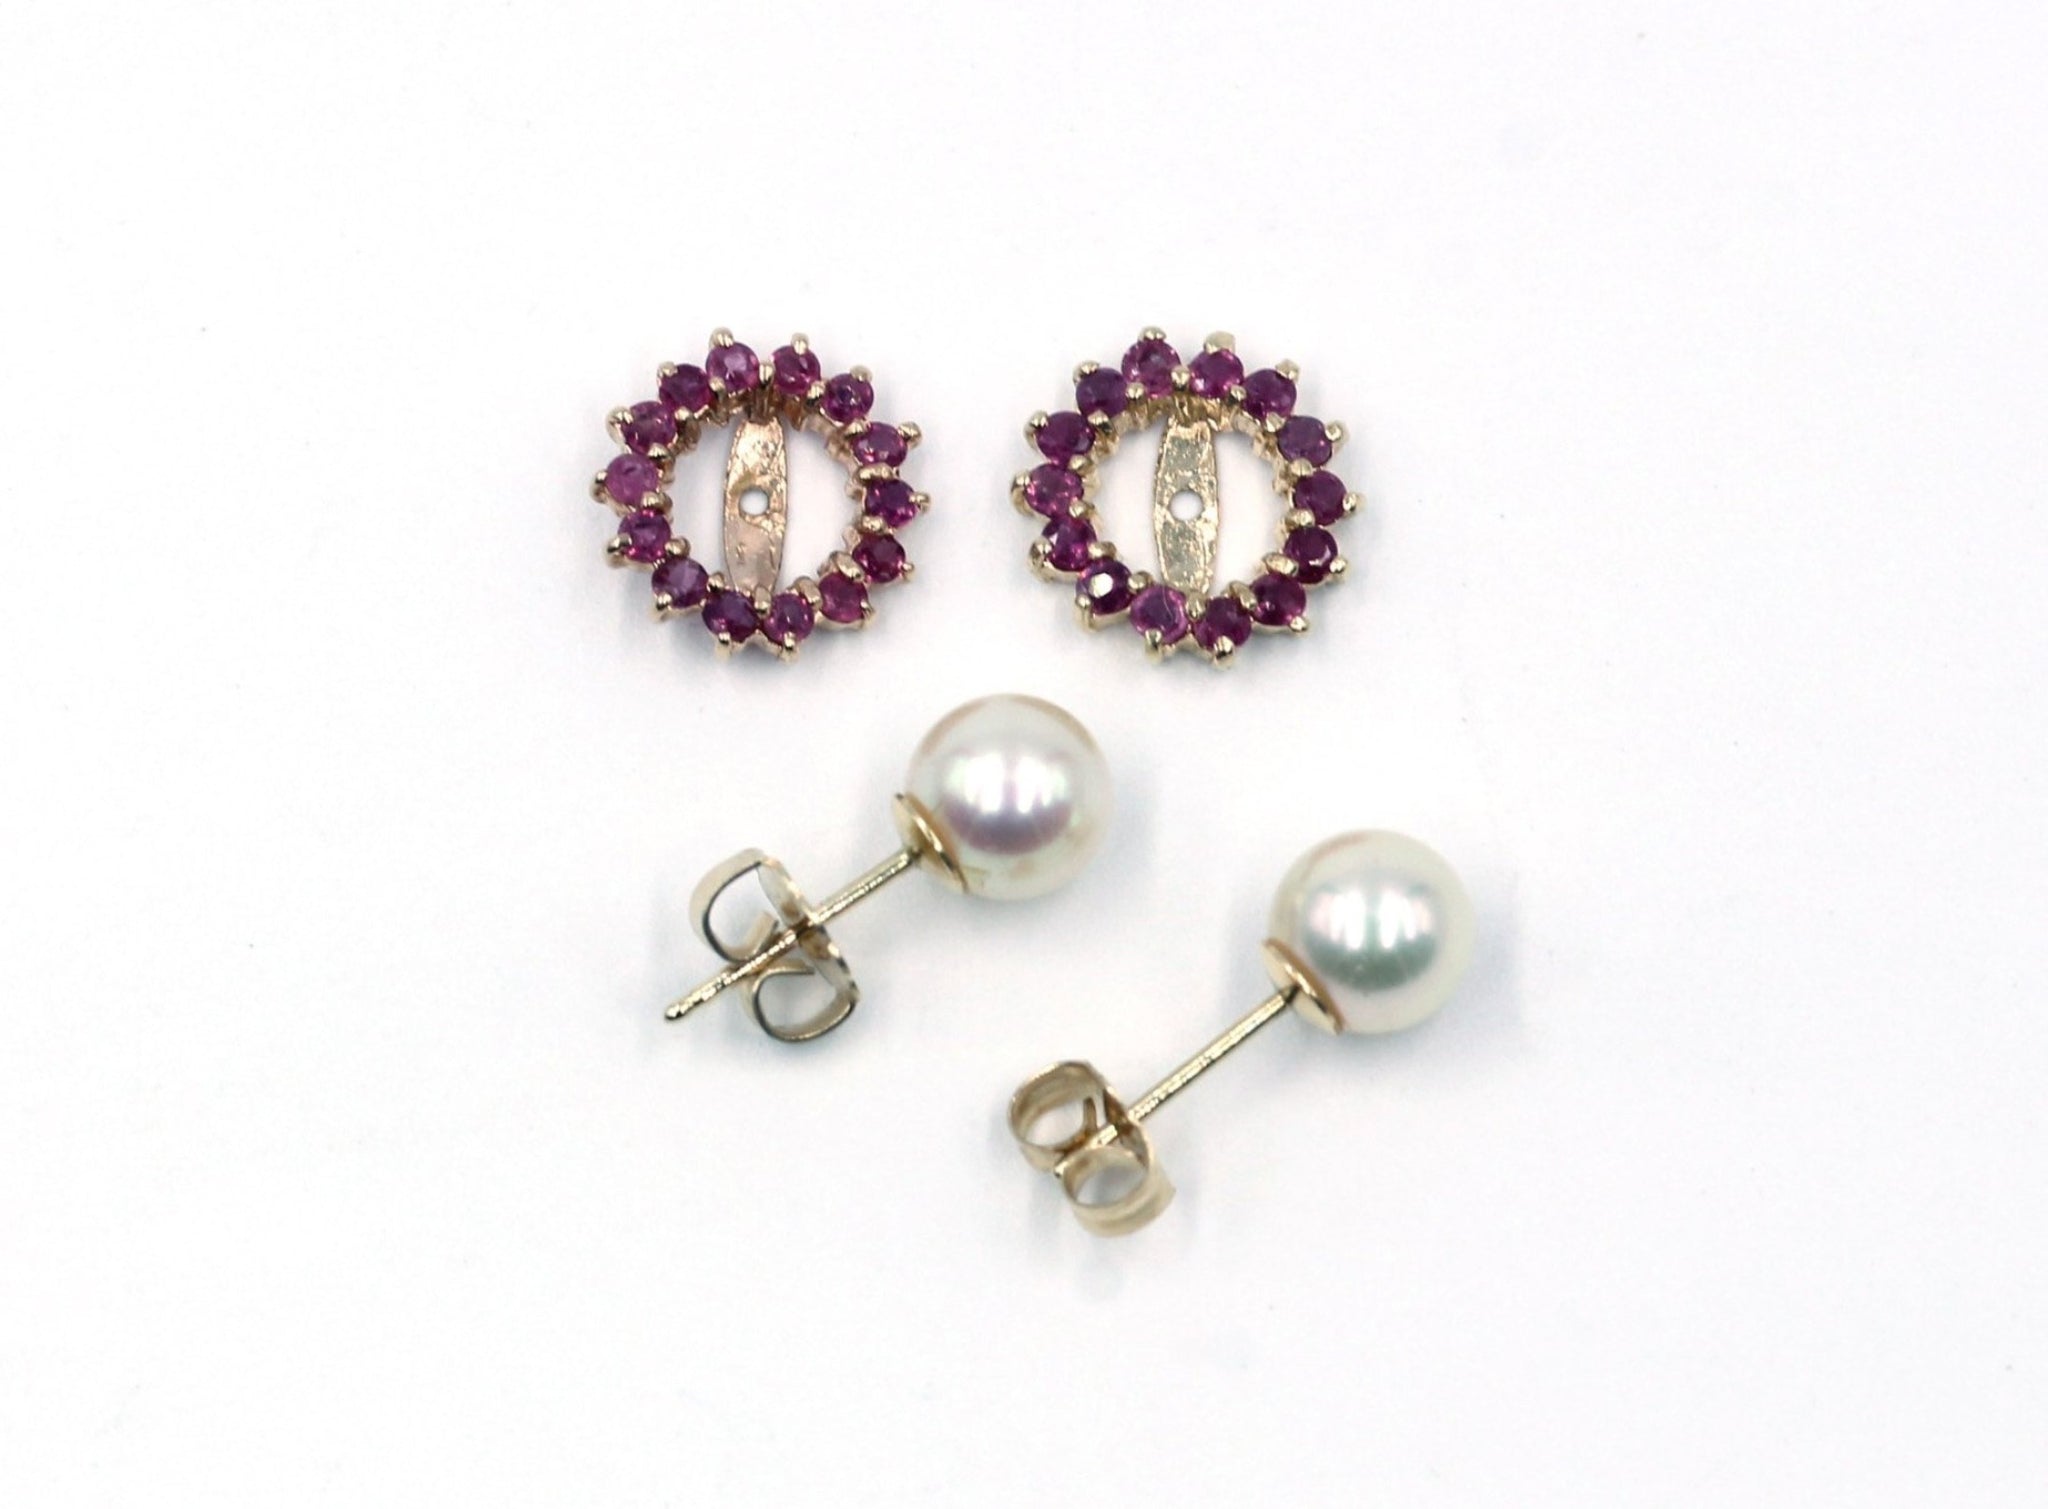 Vintage Pearl and Ruby Earrings, SOLD